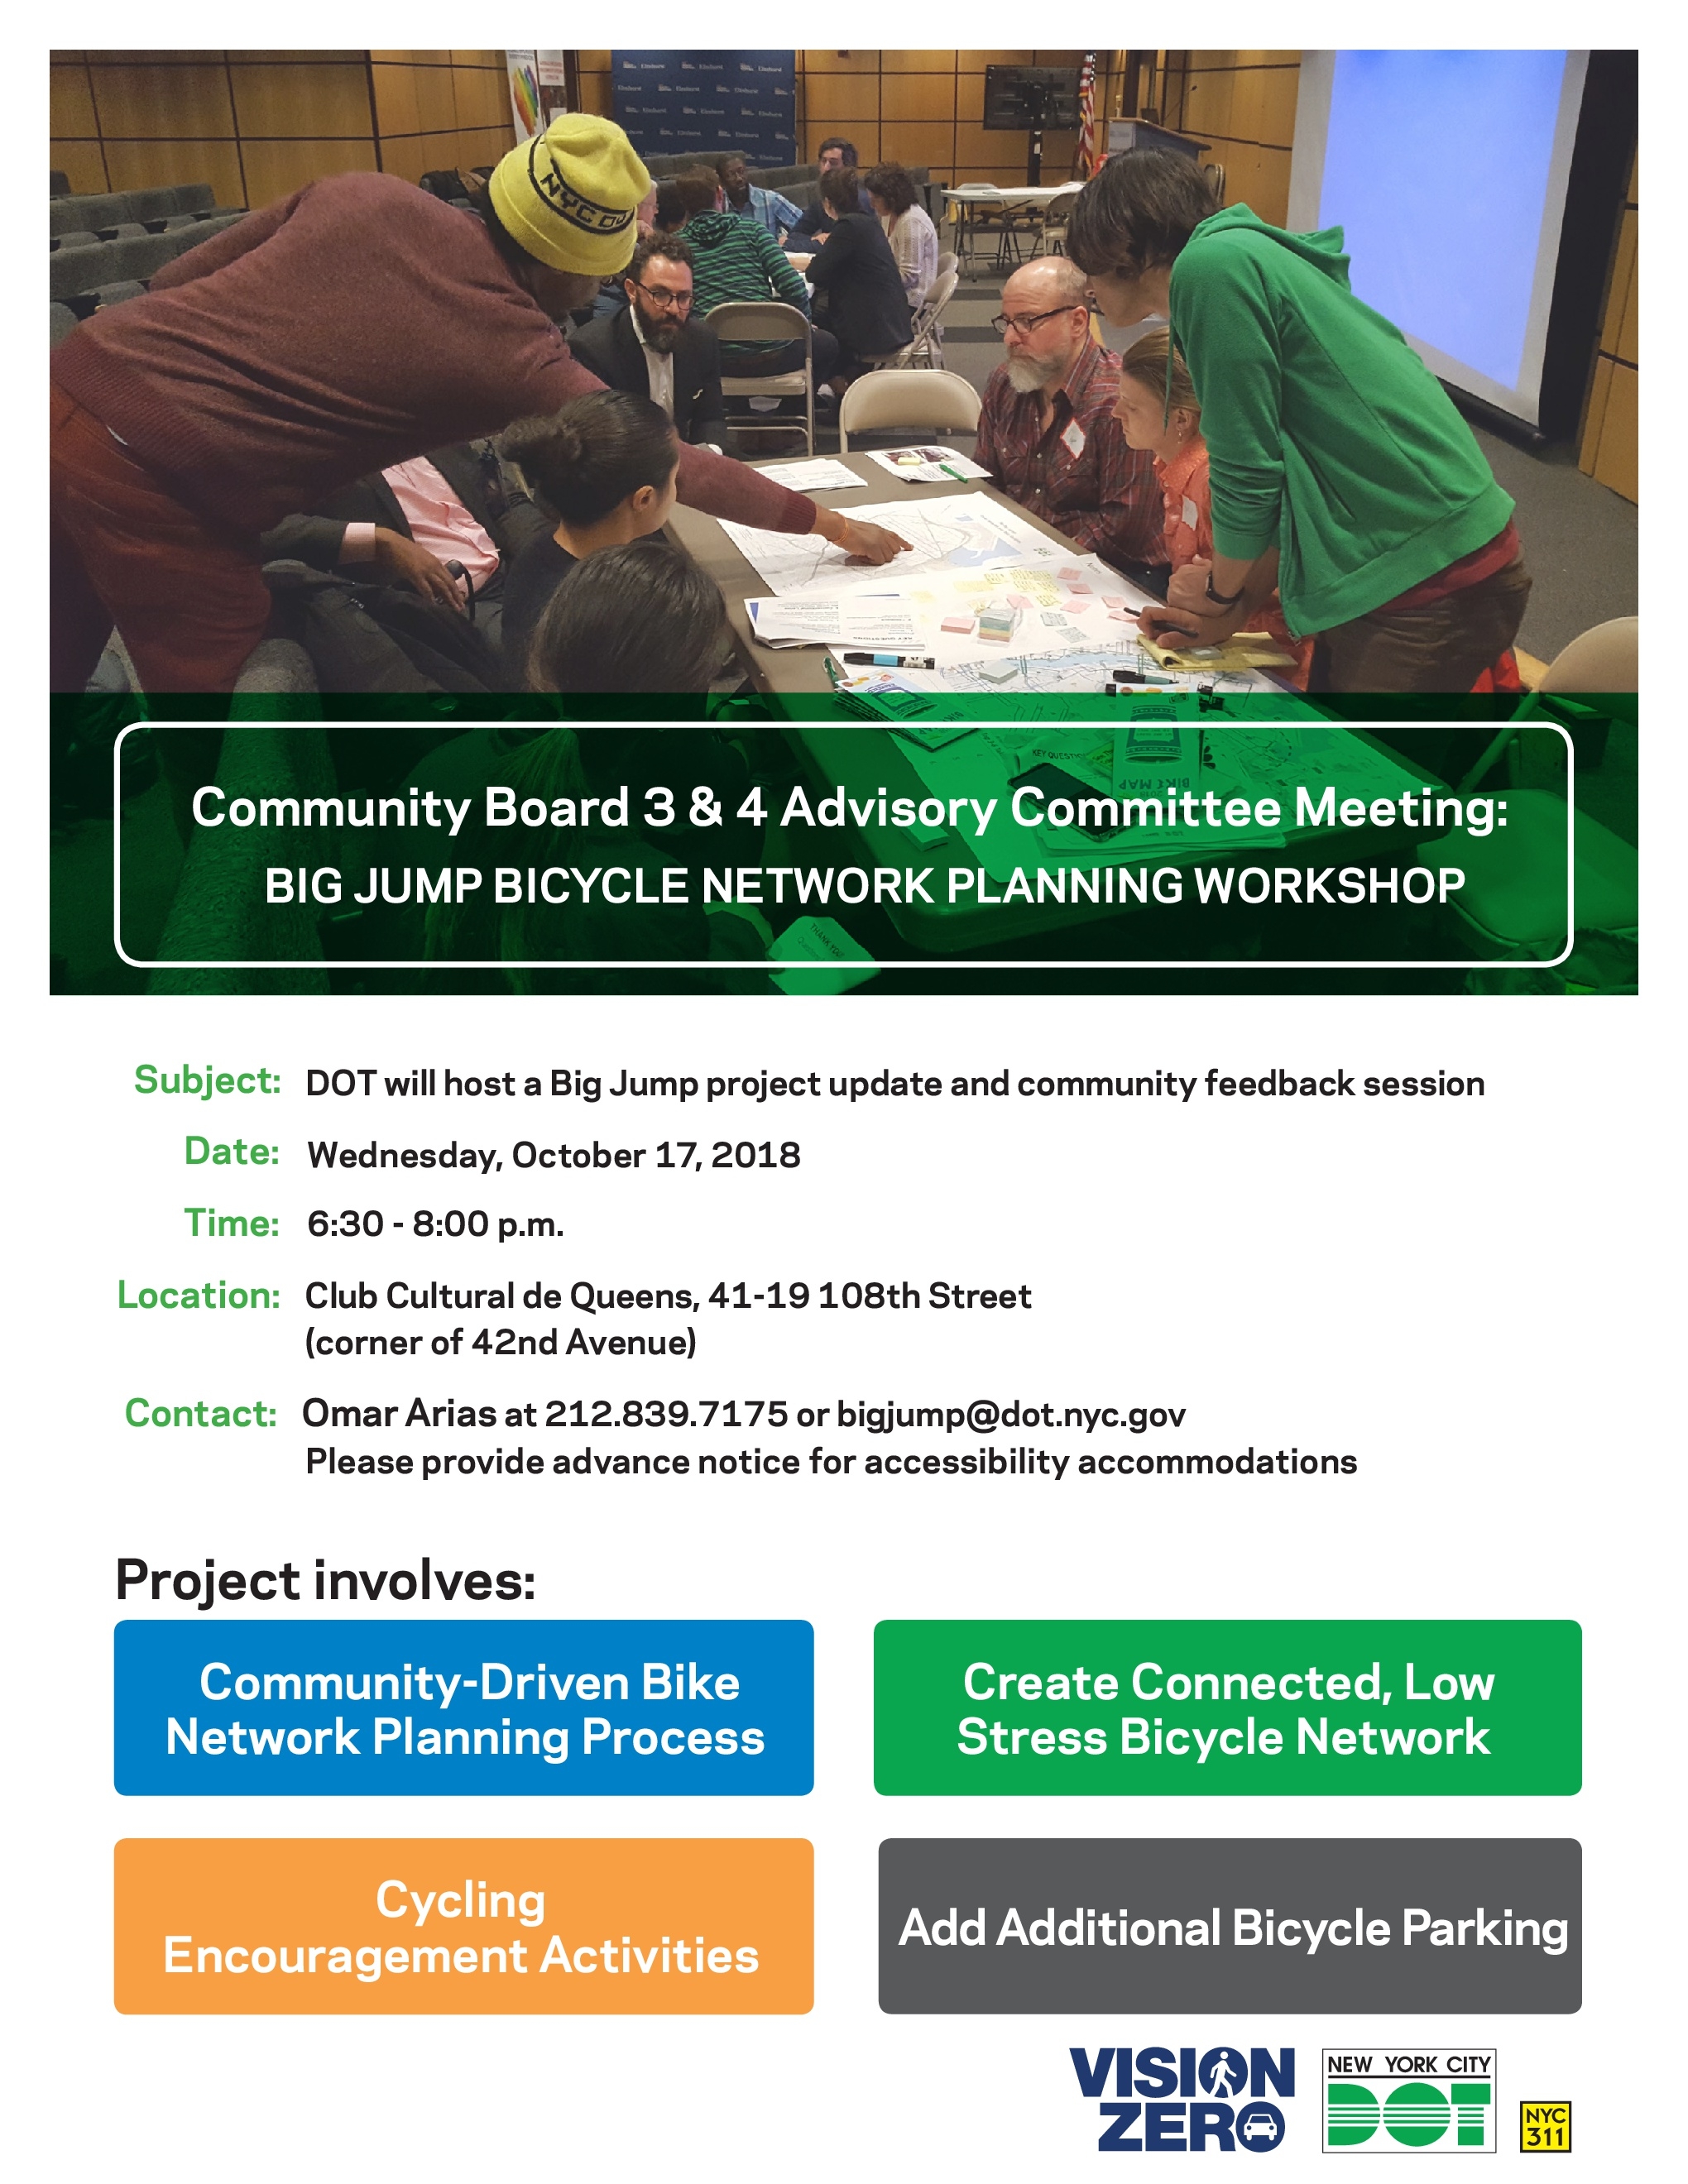 Community Workshop flyer